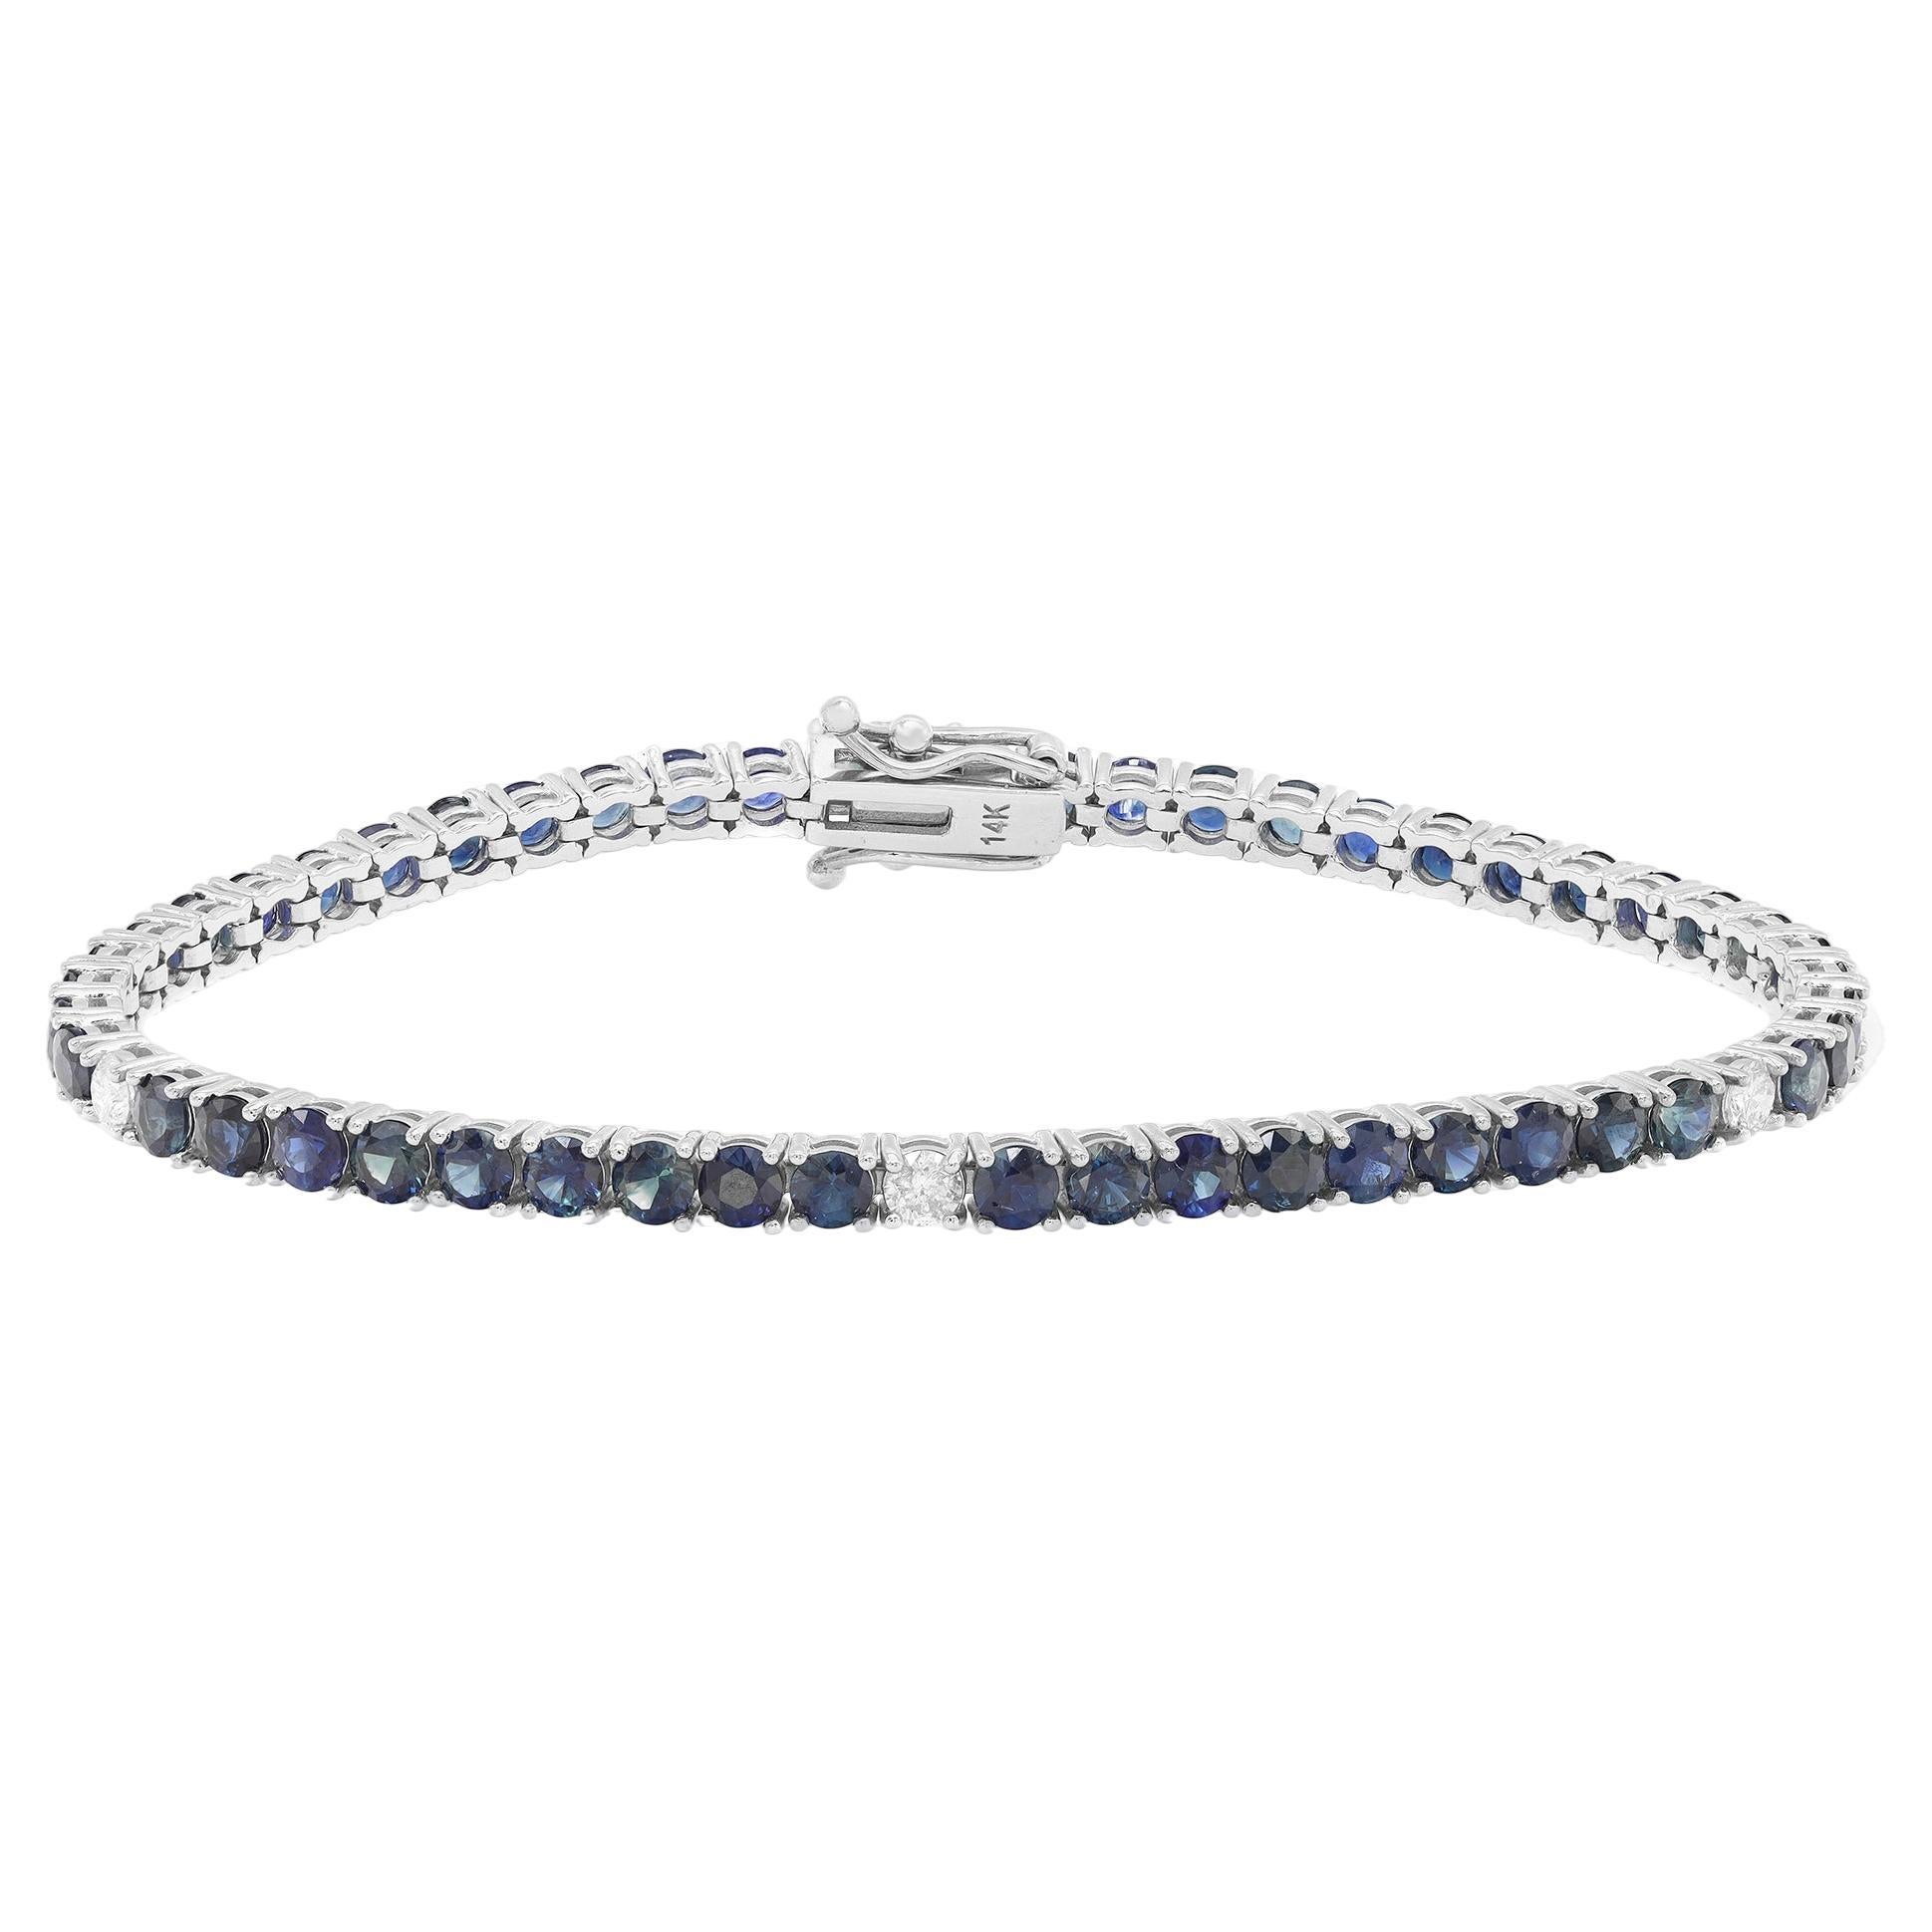 Blue Sapphire 8.31Cttw Diamond 0.32Cttw Tennis Bracelet 14k White Gold